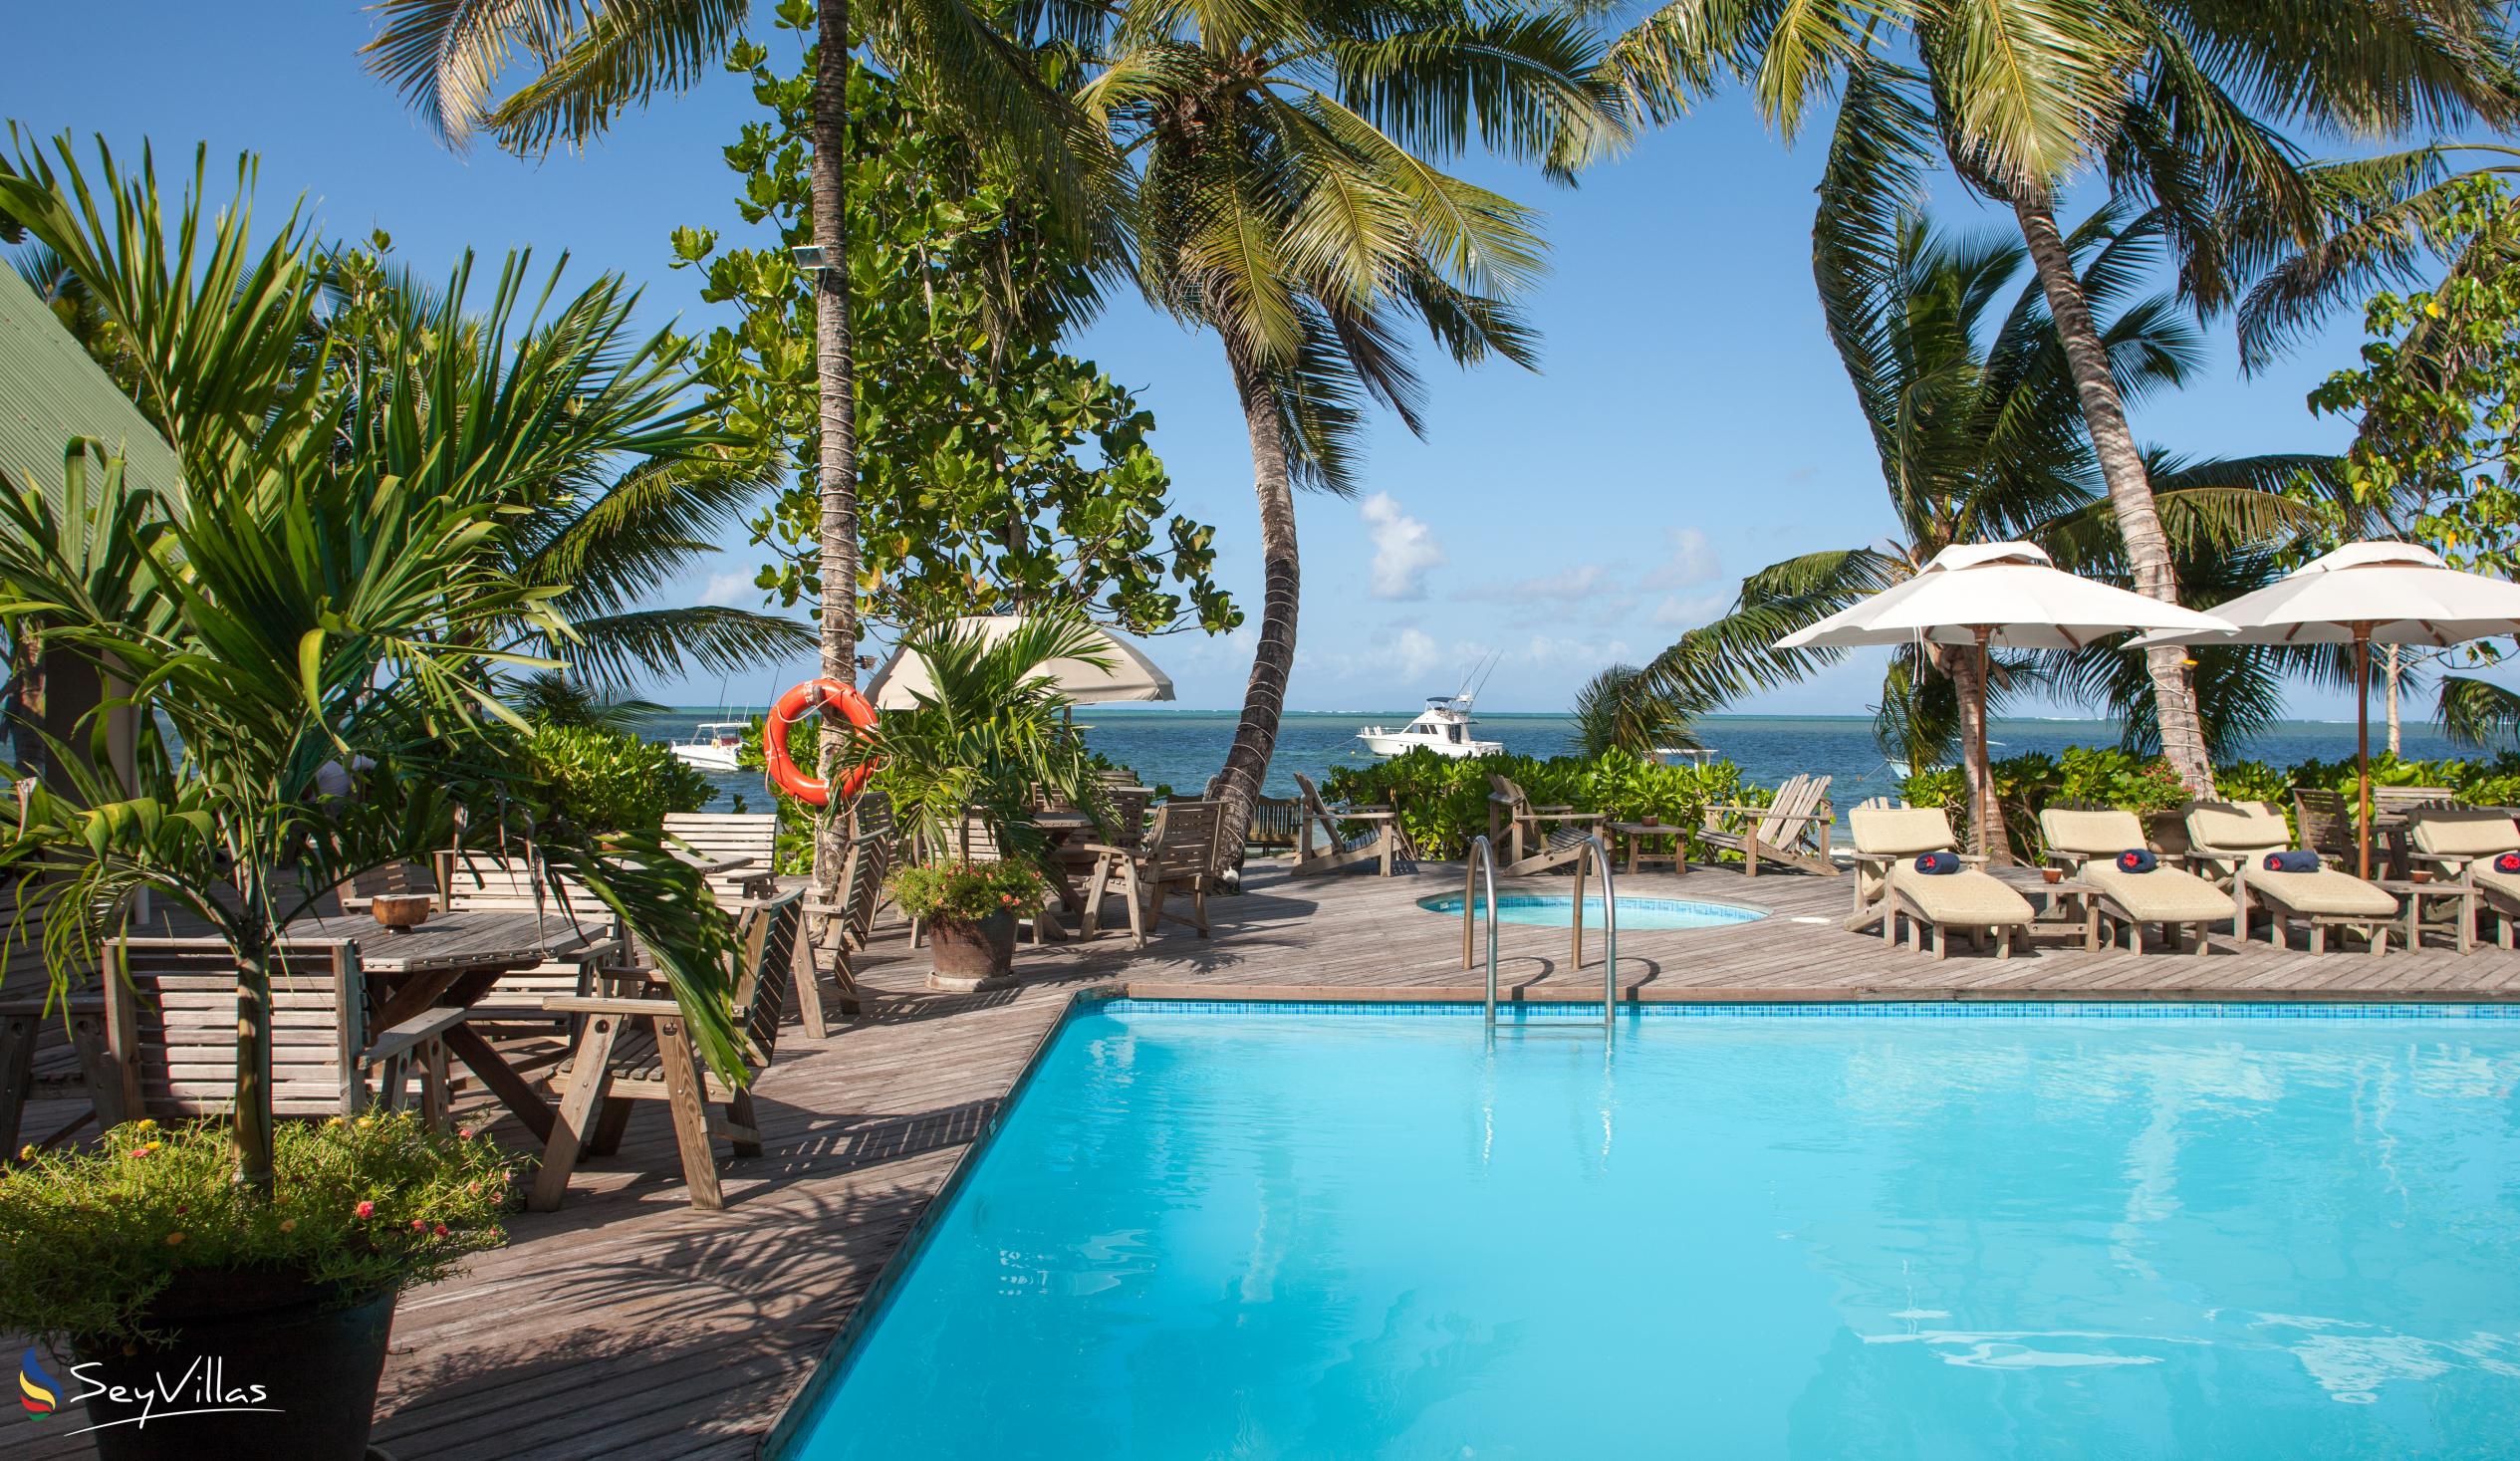 Photo 10: Indian Ocean Lodge - Outdoor area - Praslin (Seychelles)